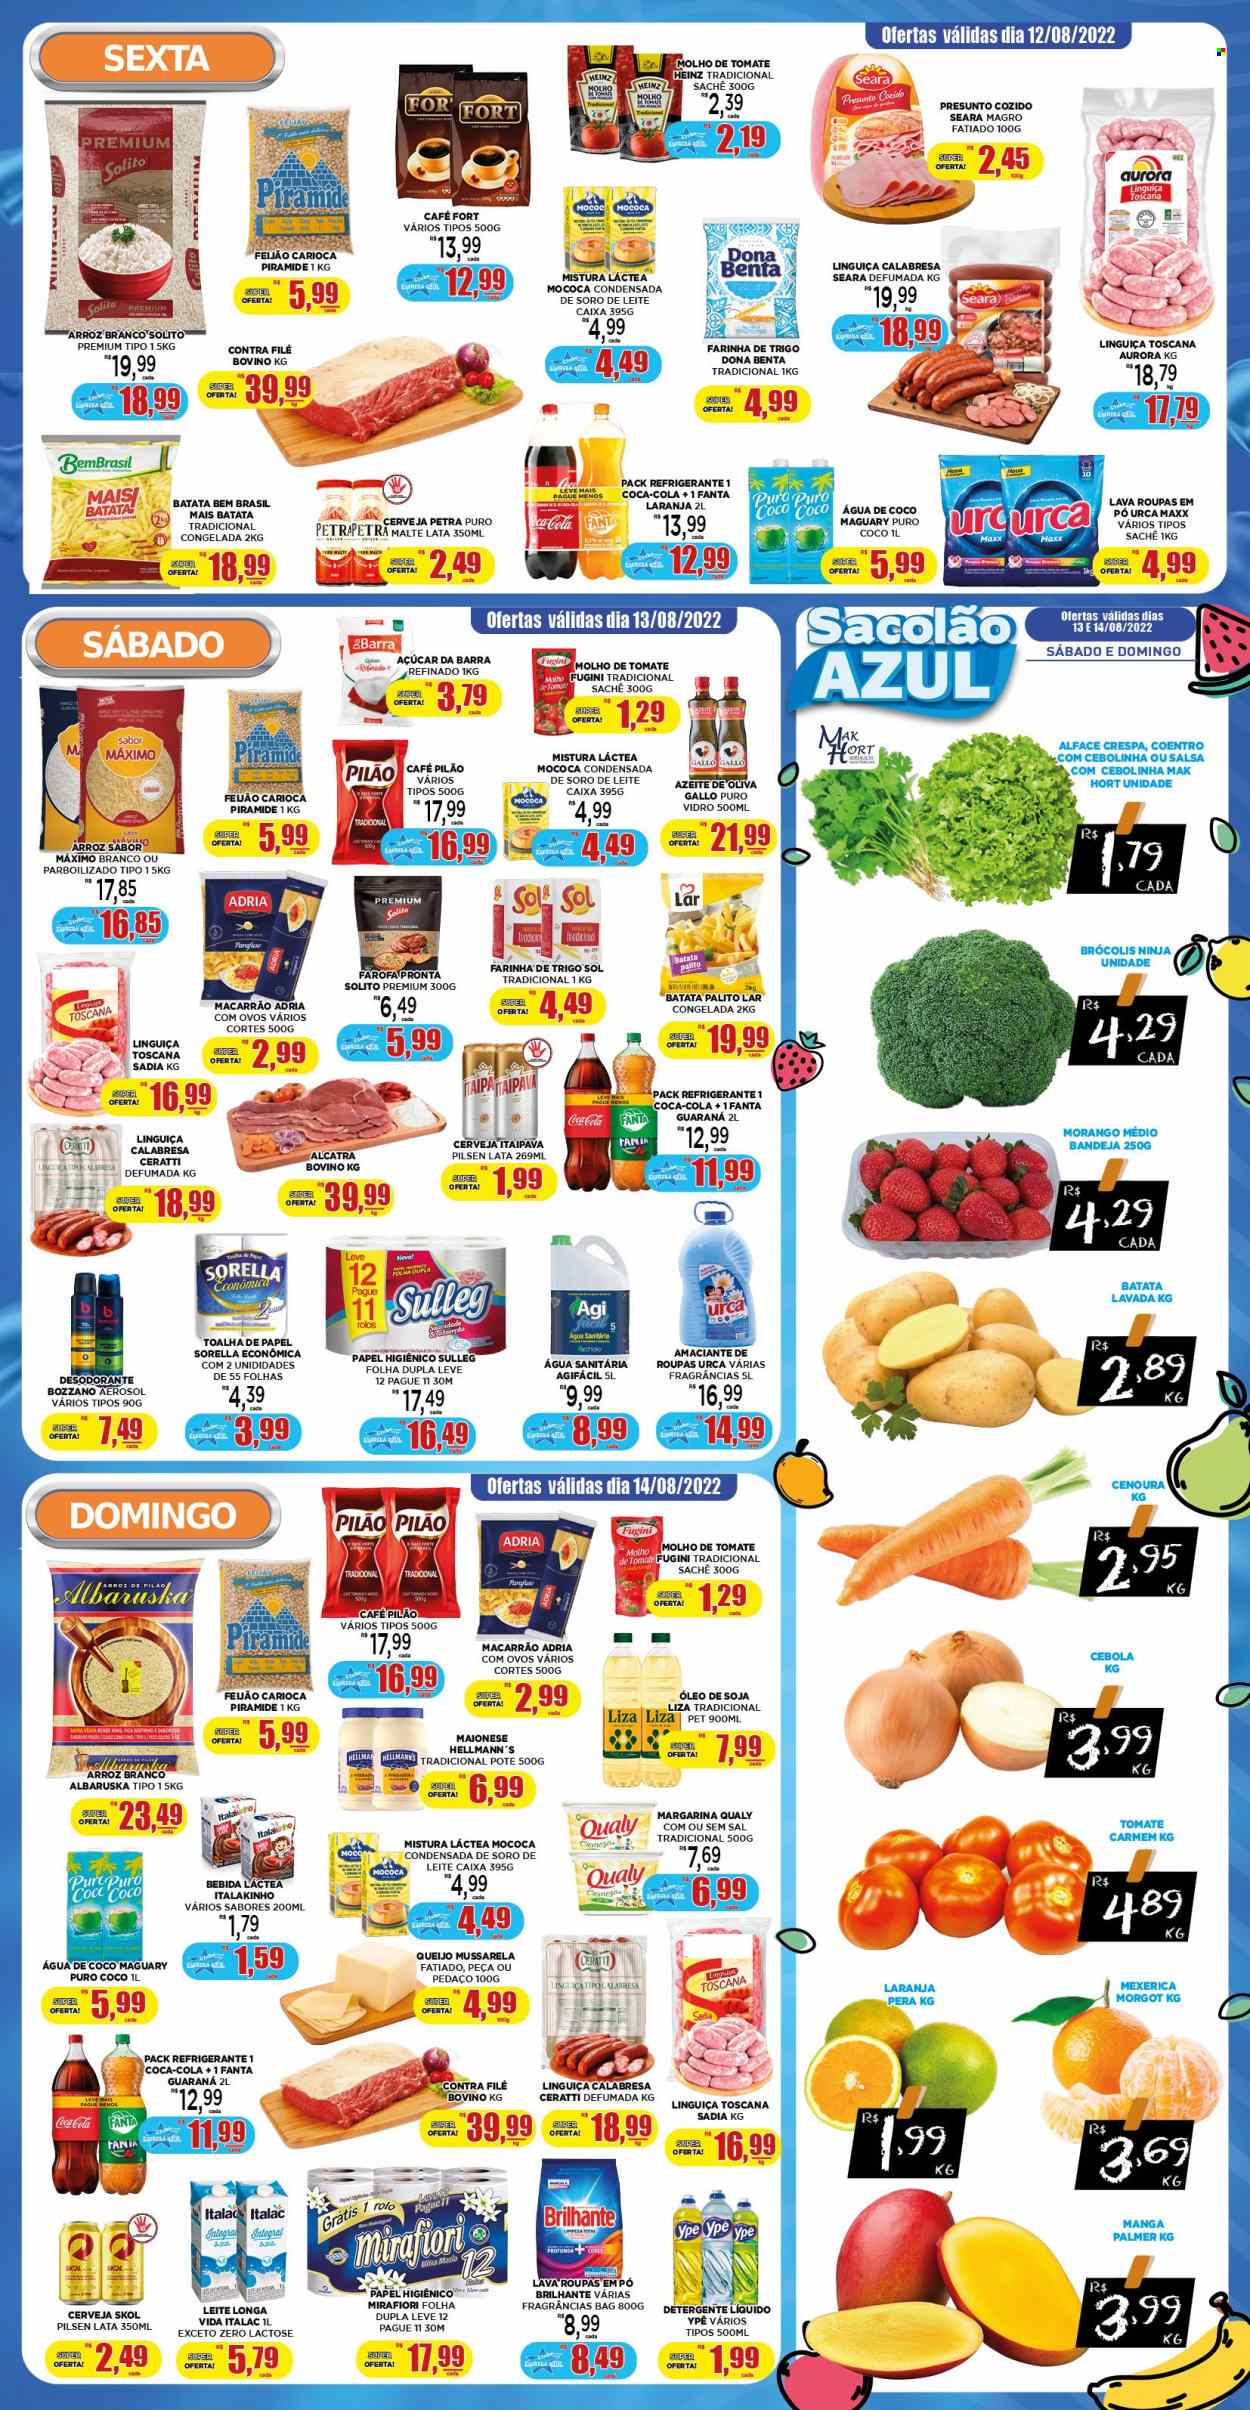 Encarte Supermercado Estrela Azul  - 08.08.2022 - 17.08.2022.